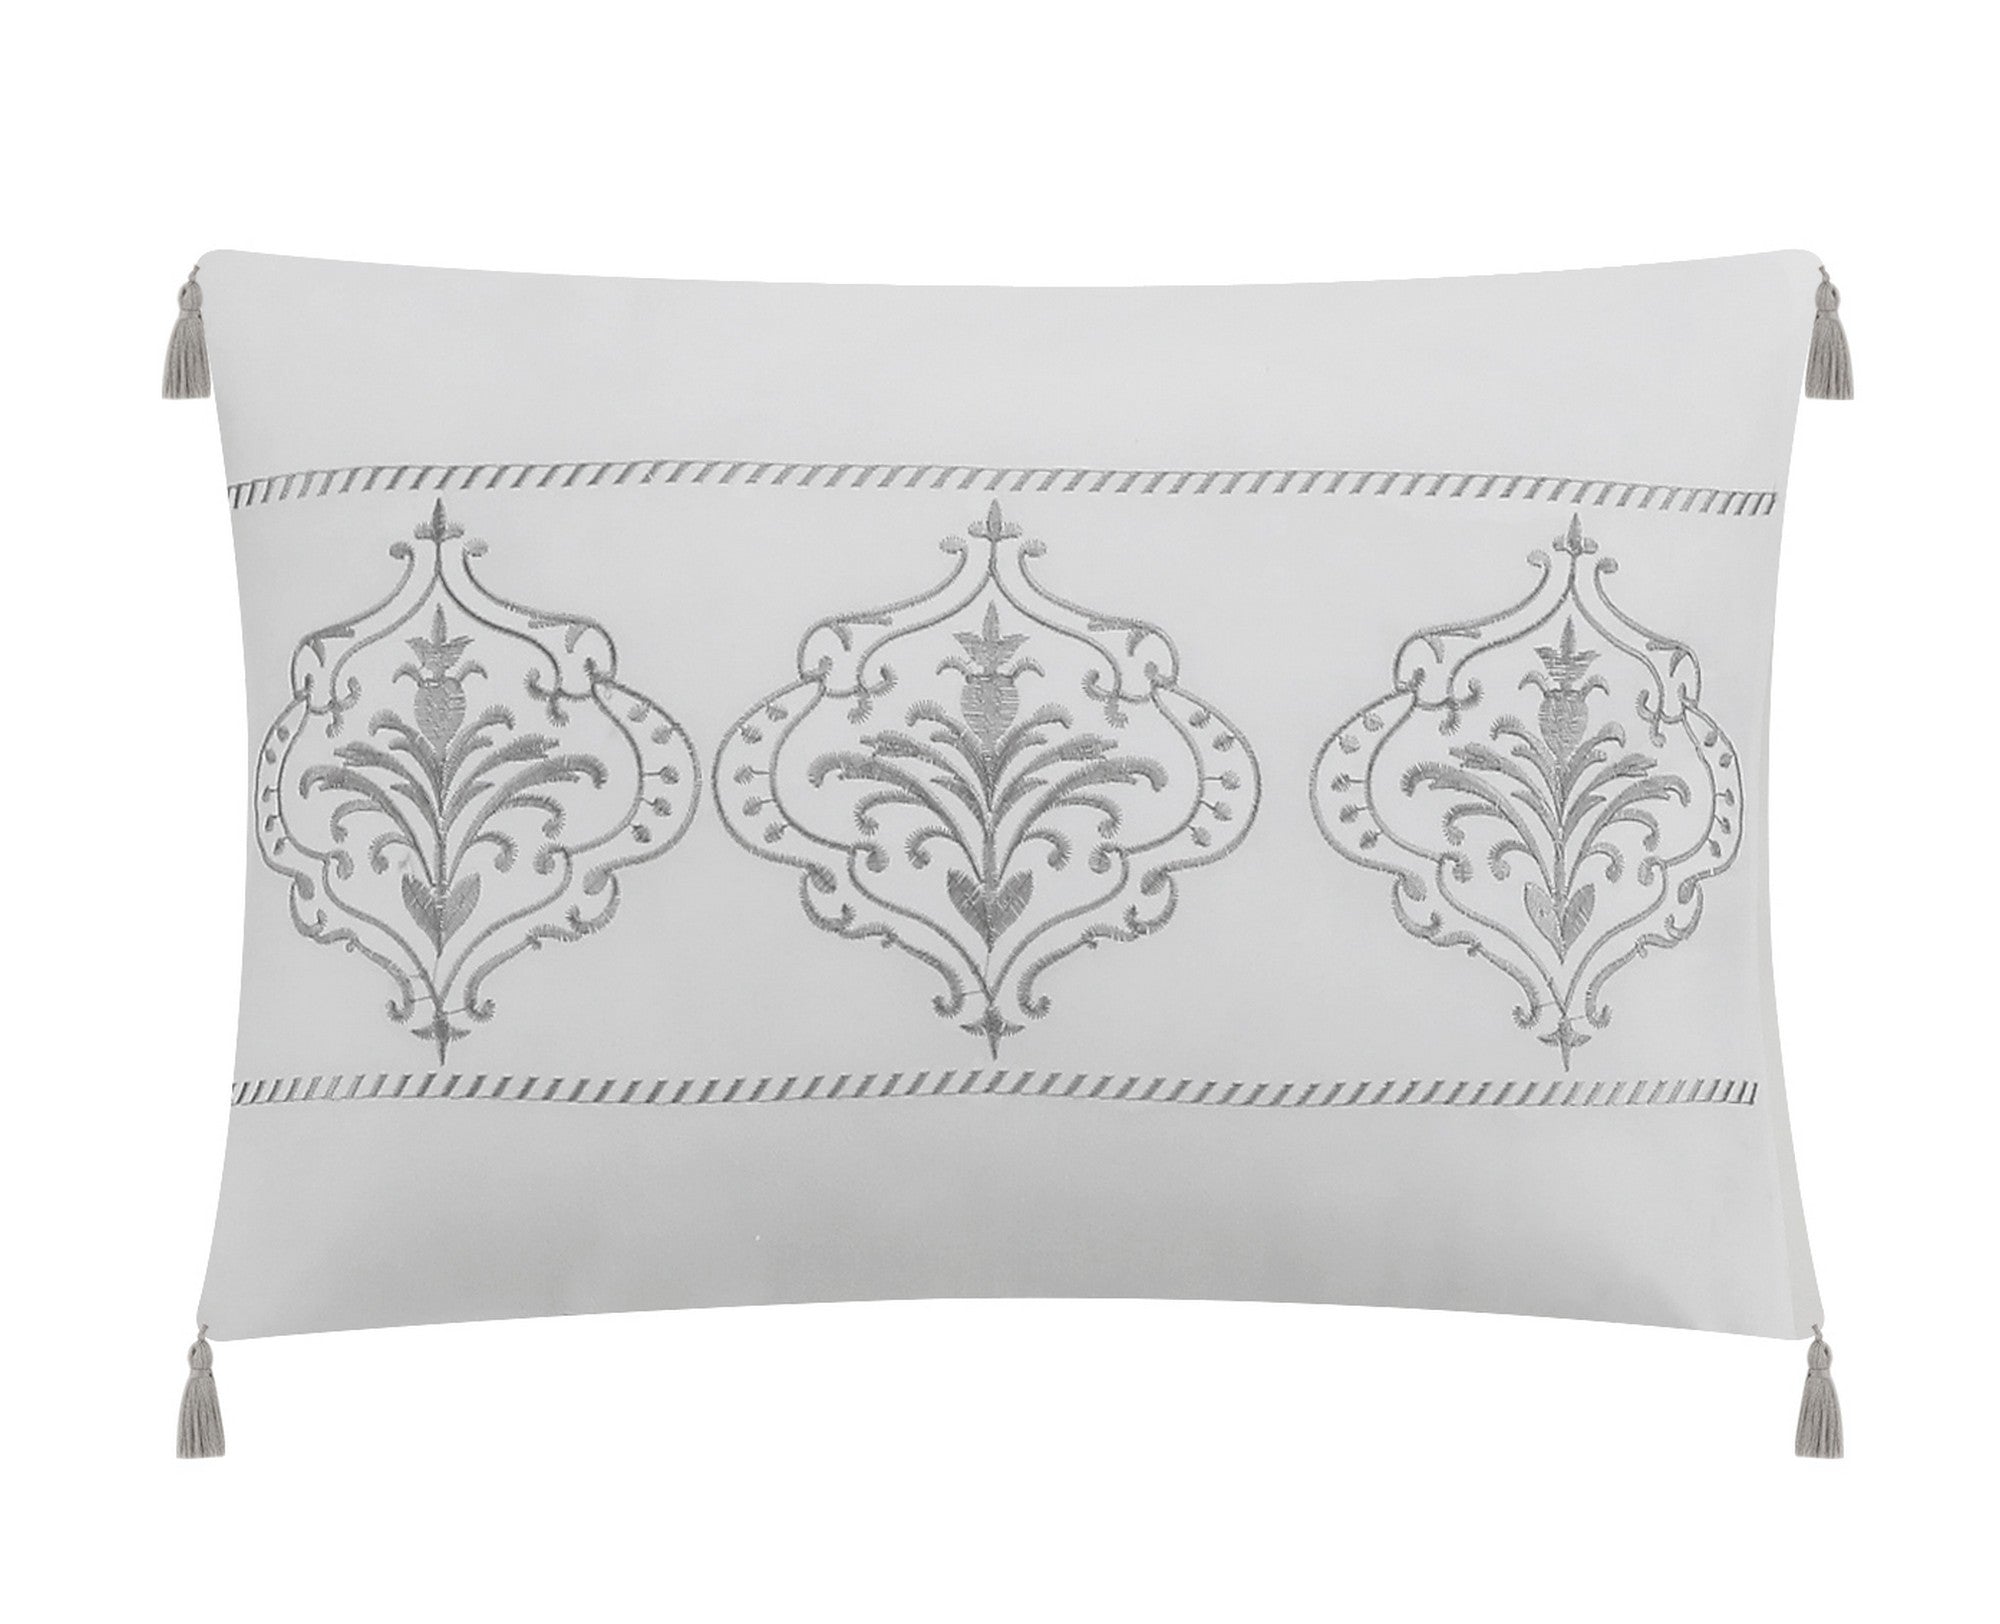 NY&C Home Artista 5 Piece Cotton Blend Comforter Set Jacquard Geometric Pattern Design Bedding - Decorative Pillows Shams Included, King, Grey - King